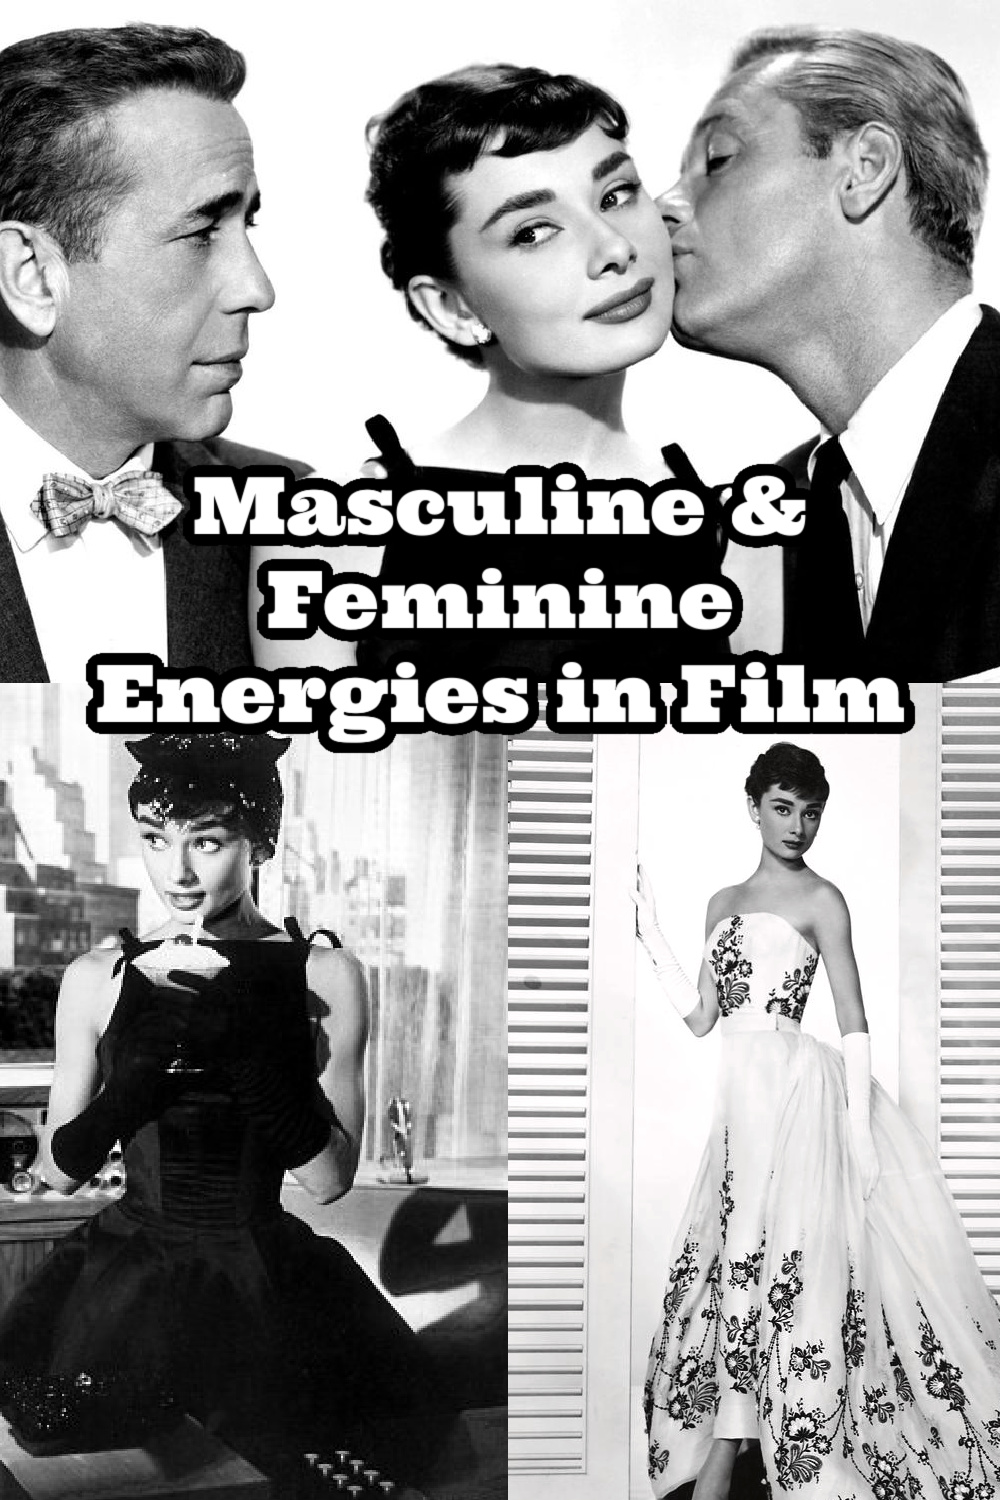 Feminine Radiance is Irresistible | Femininity in Film | Sabrina w/ Audrey Hepburn & Humphrey Bogart